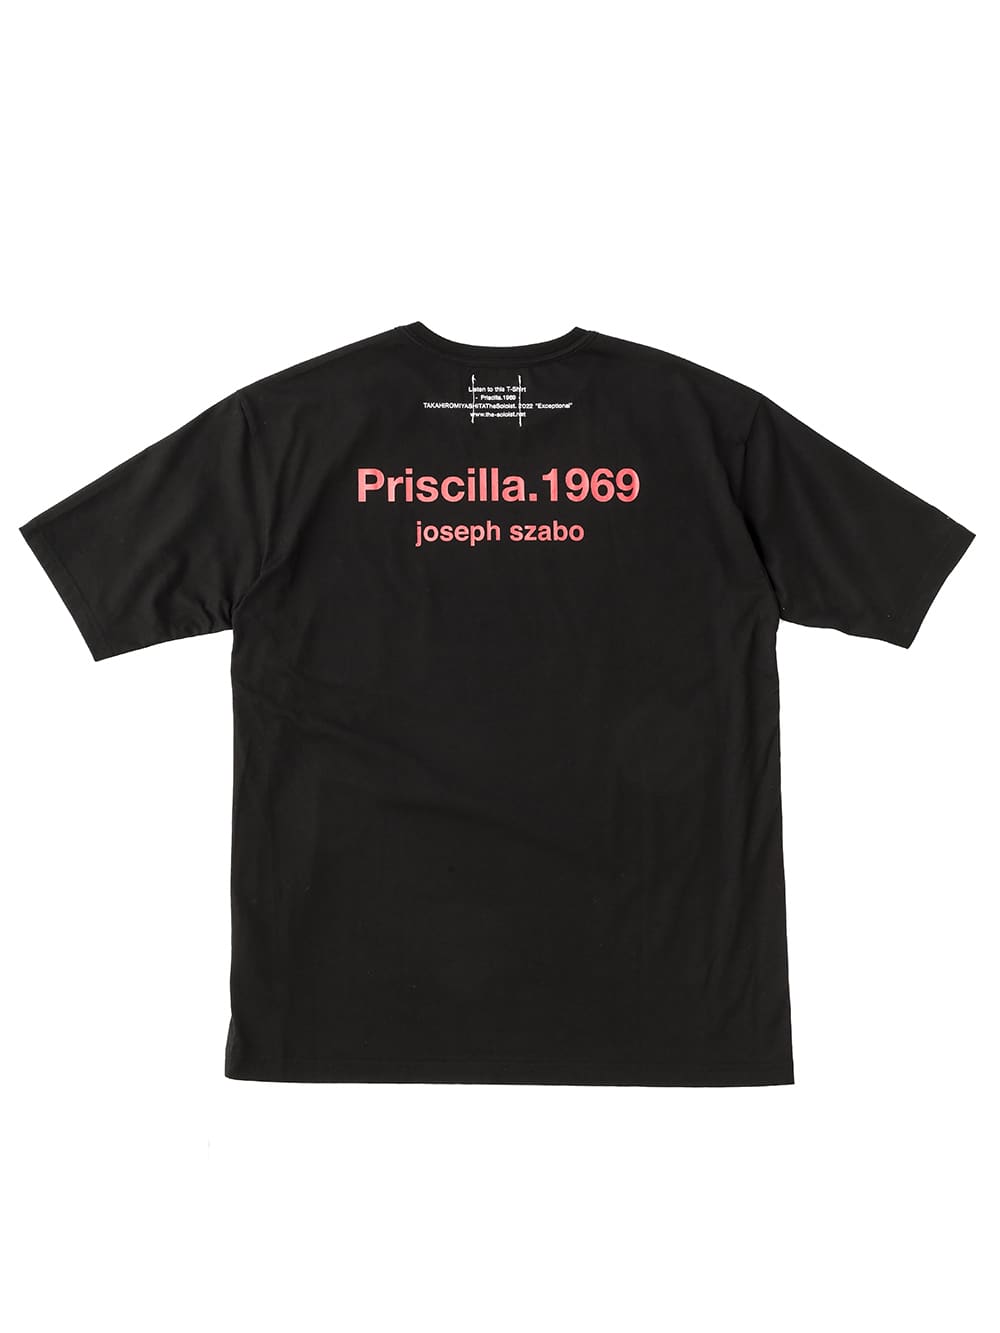 priscilla 1969 (オーバーサイズドショートスリーブポケットTシャツ)